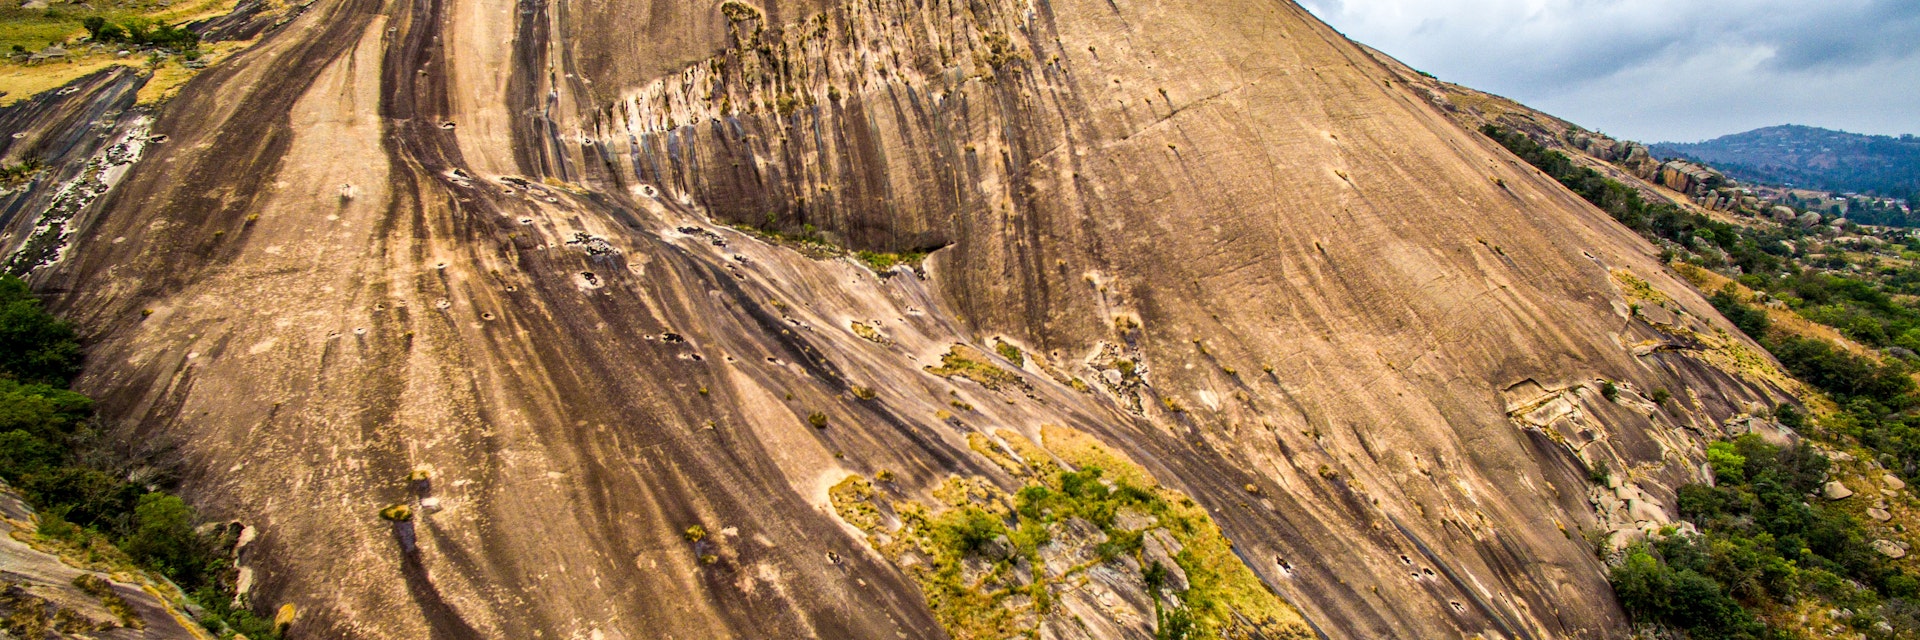 Mbuluzi, Swaziland- Famous Swazi landmark "Sibebe Rock", is the largest exposed granite pluton in the world and the world's second largest rock.